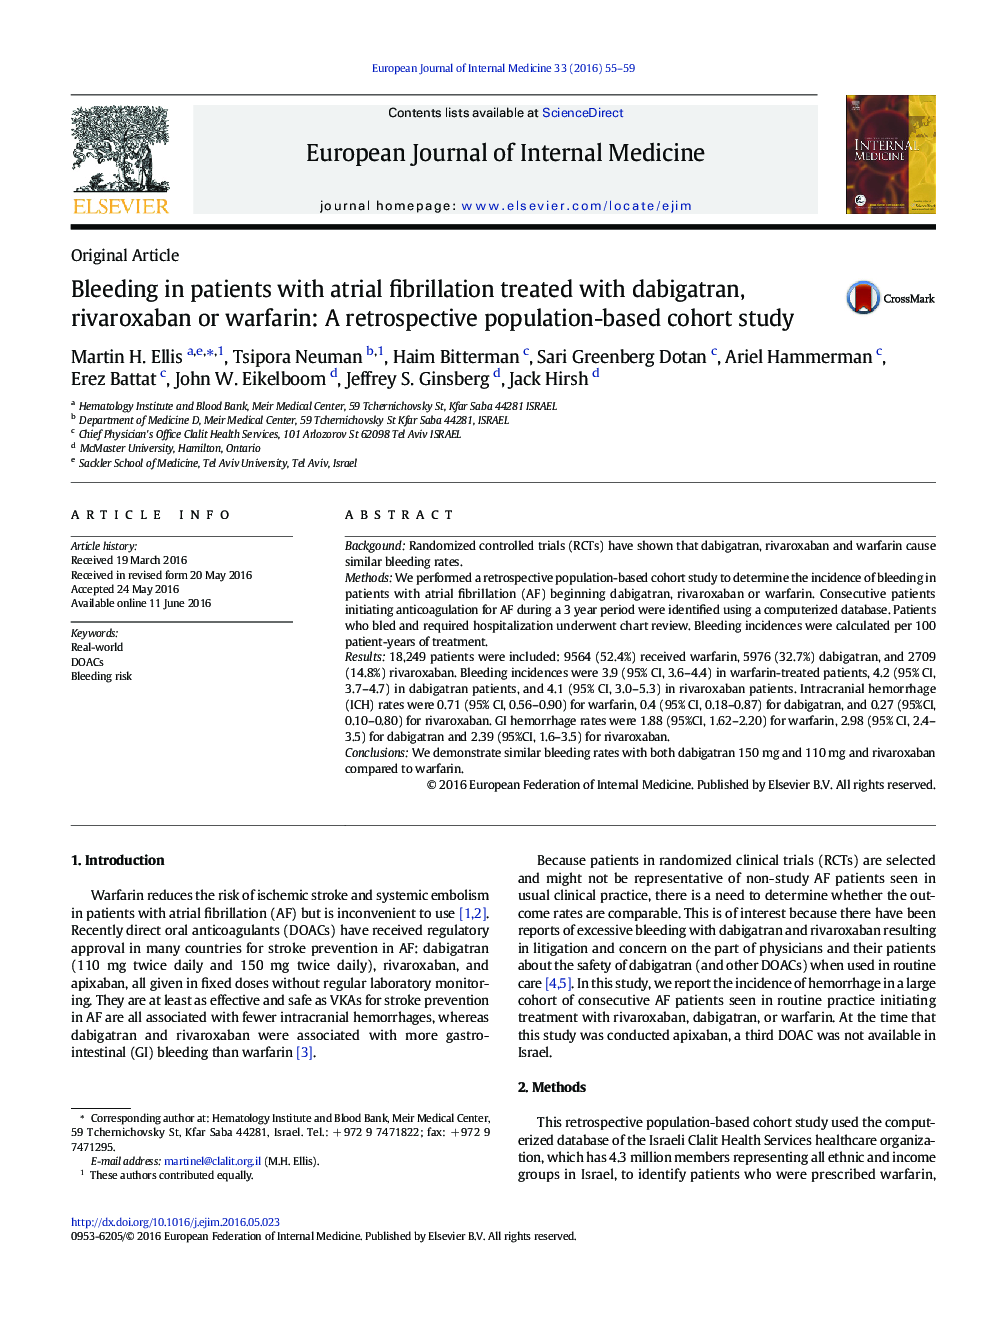 Bleeding in patients with atrial fibrillation treated with dabigatran, rivaroxaban or warfarin: A retrospective population-based cohort study